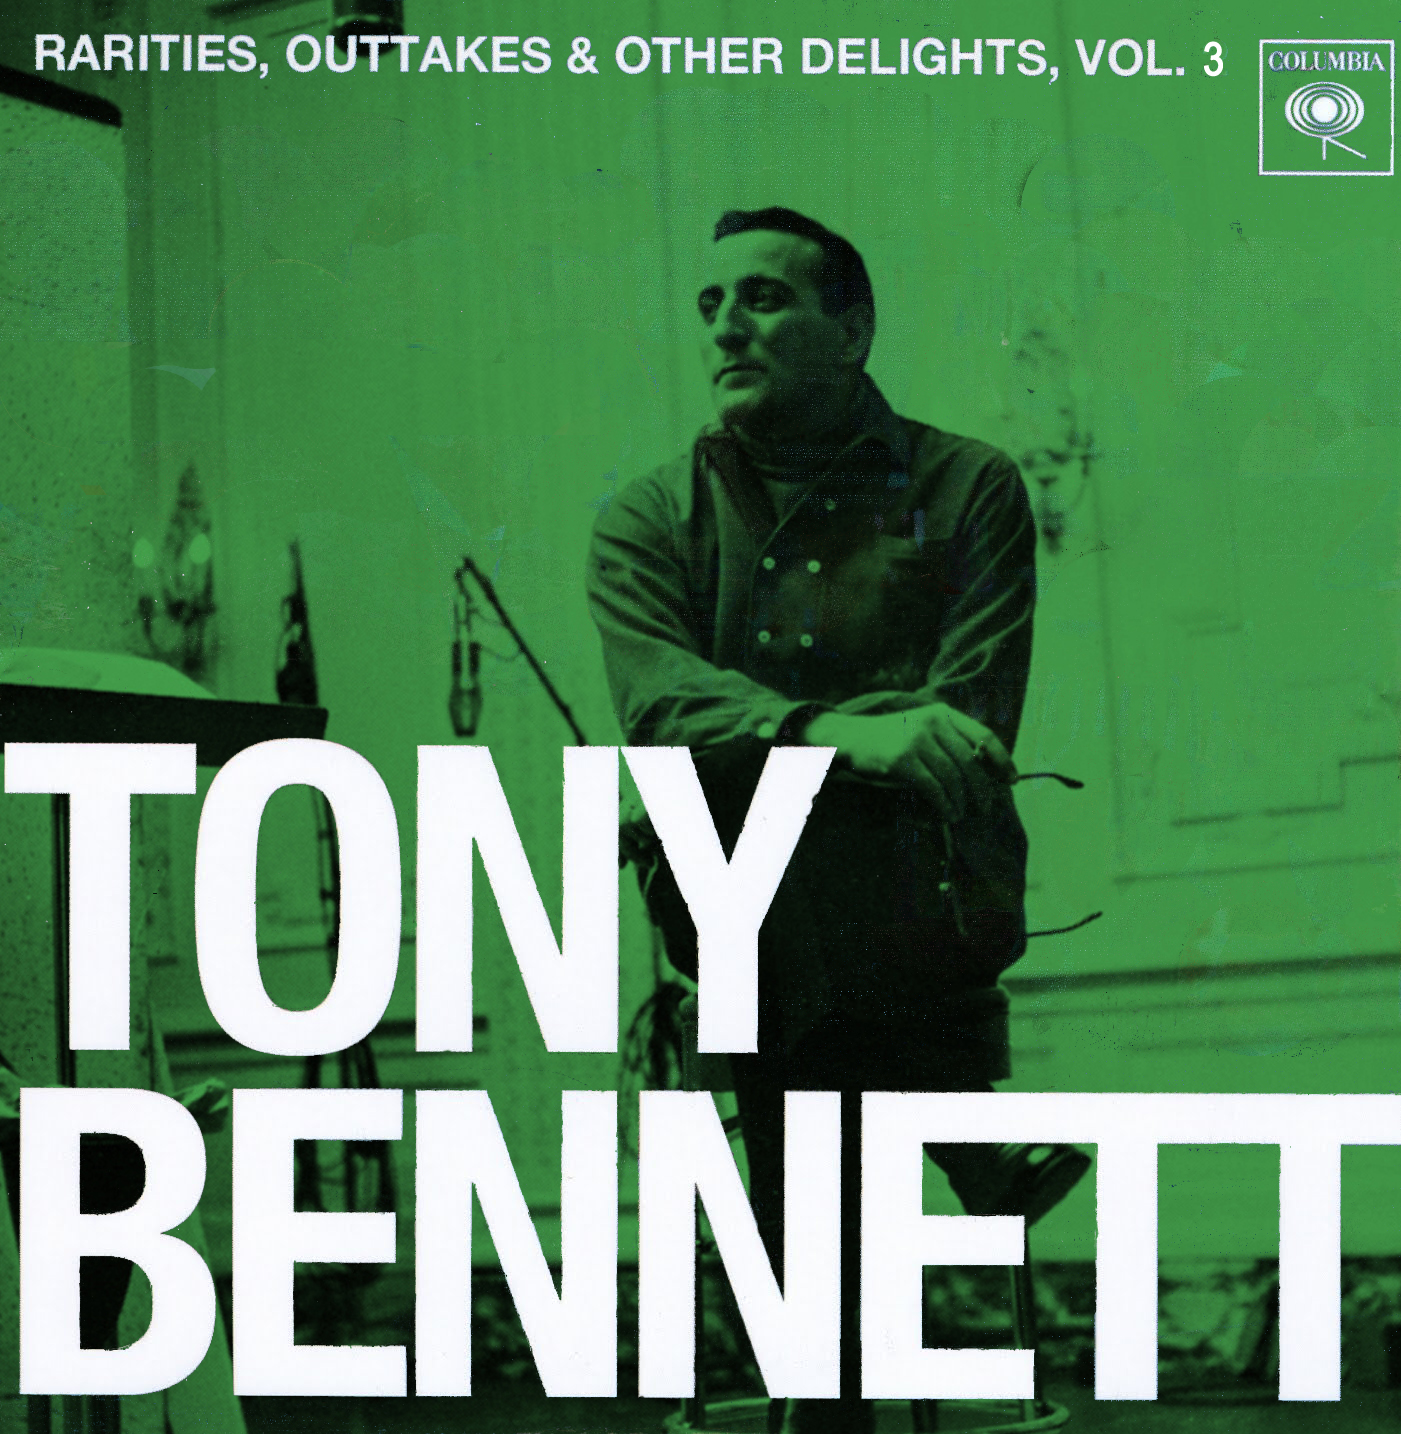 Missing Bennett: Tony Bennett - Rarities, Outtakes & Other Delights, Vol. 3